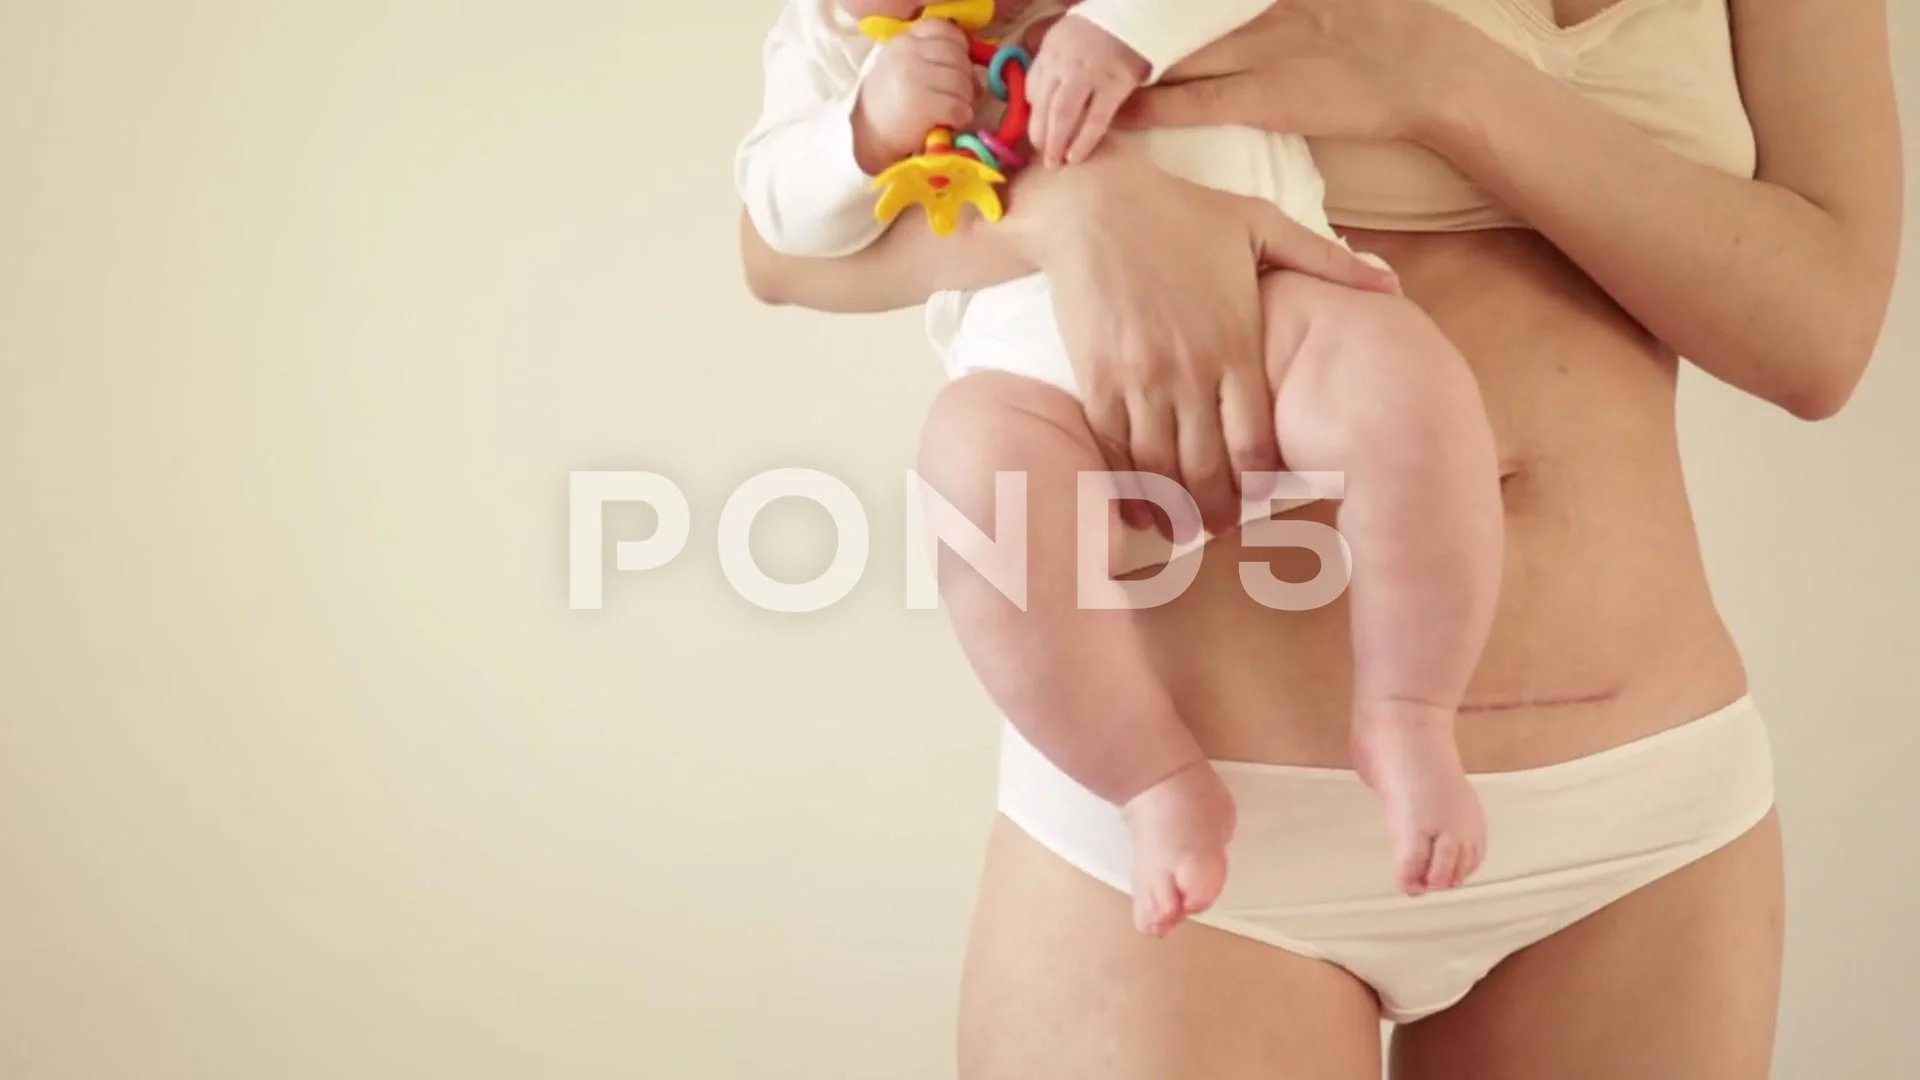 https://images.pond5.com/young-mother-underwear-scar-cesarean-footage-201211588_prevstill.jpeg